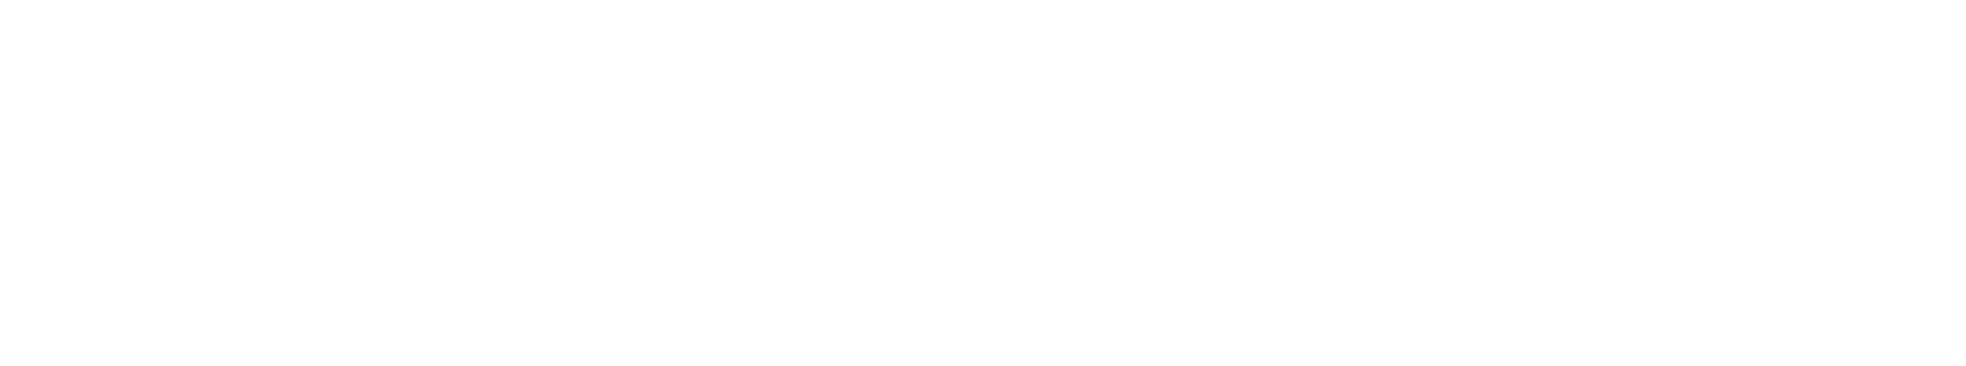 Australian Government logo with screen Australia logo